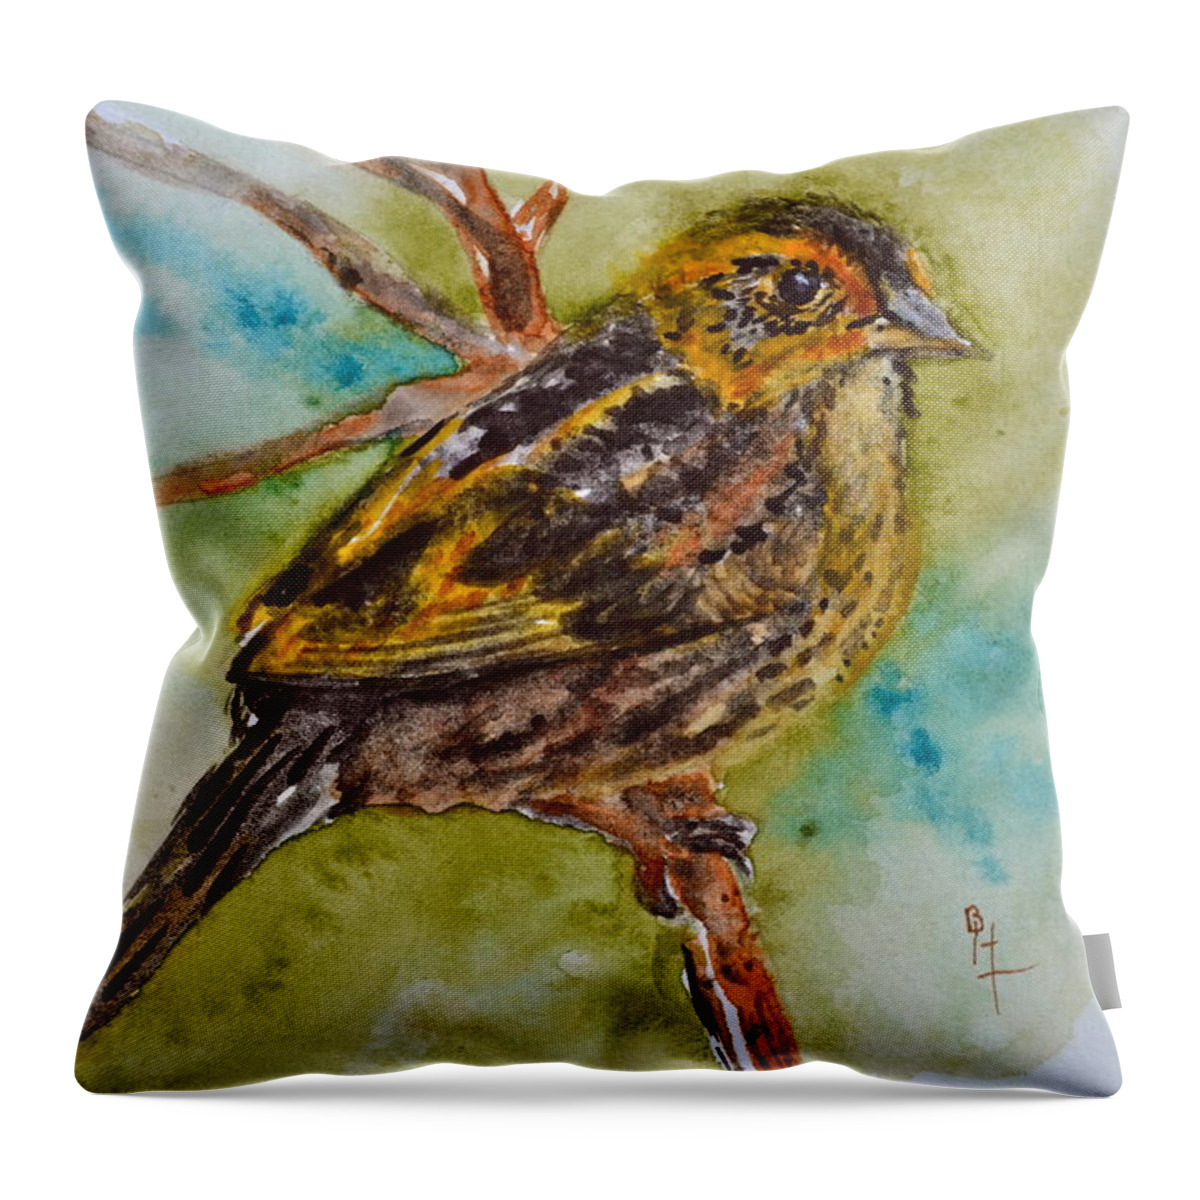 Saltmarsh Sparrow Throw Pillow featuring the painting Saltmarsh Sparrow by Beverley Harper Tinsley